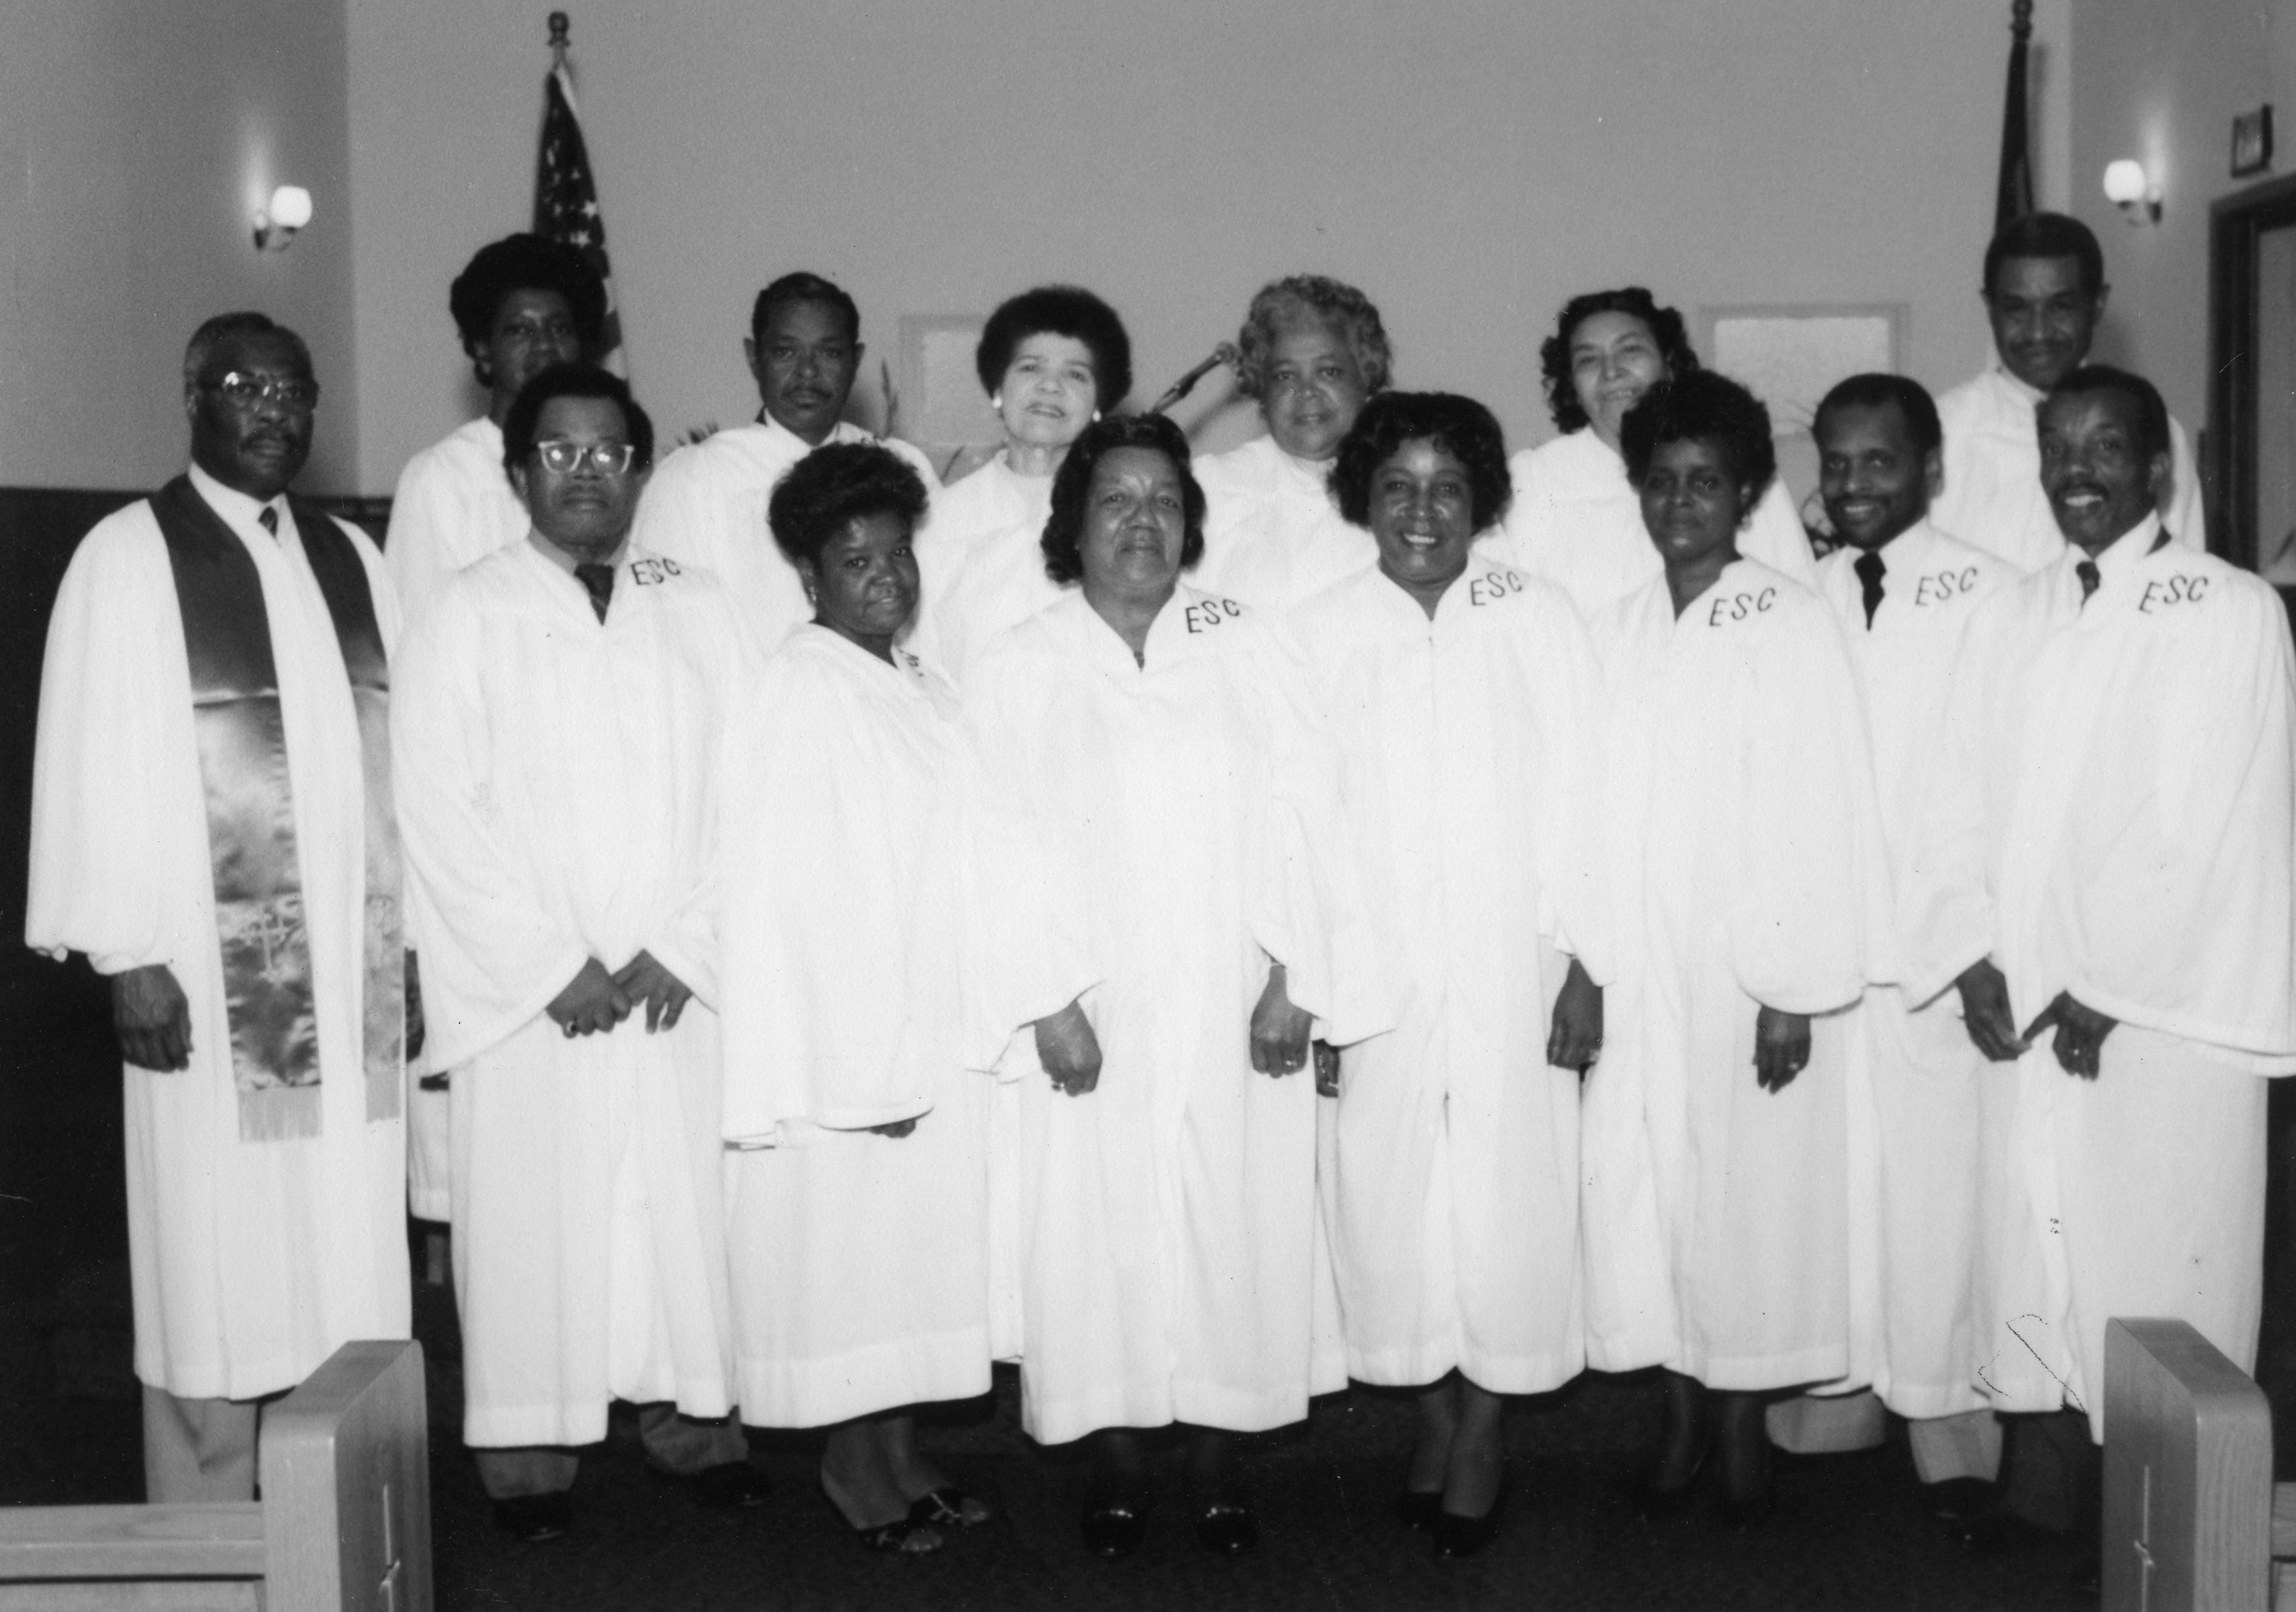 The Embry Senior choir in 1980.